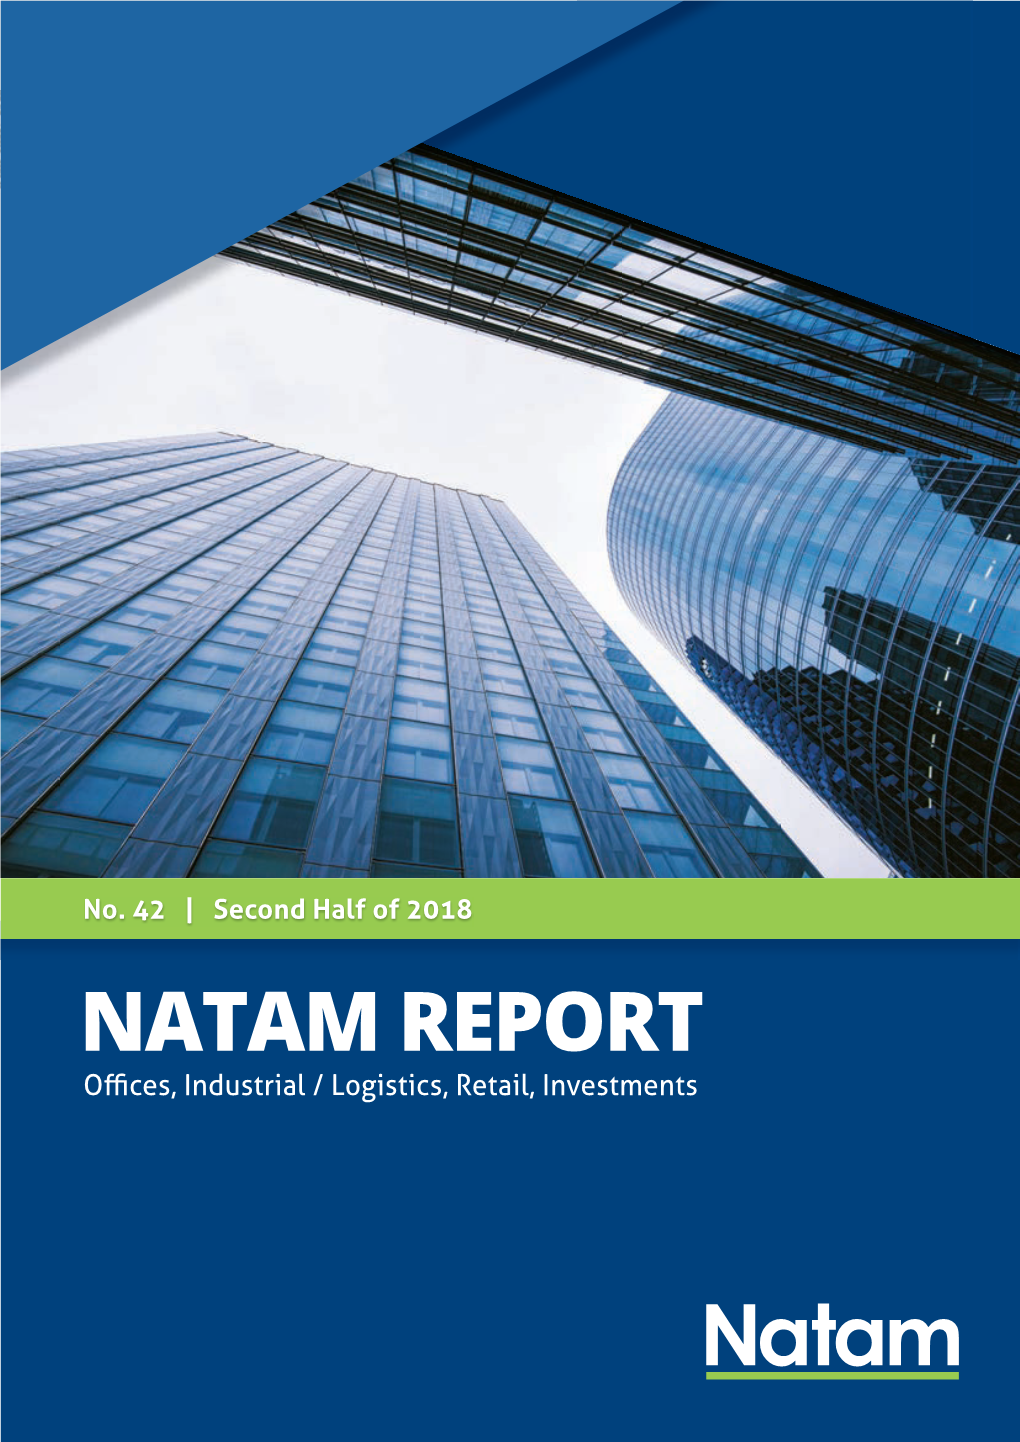 No. 42 | Second Half of 2018 NATAM REPORT Offices, Industrial / Logistics, Retail, Investments 2 Natam Report | Second Half 2018